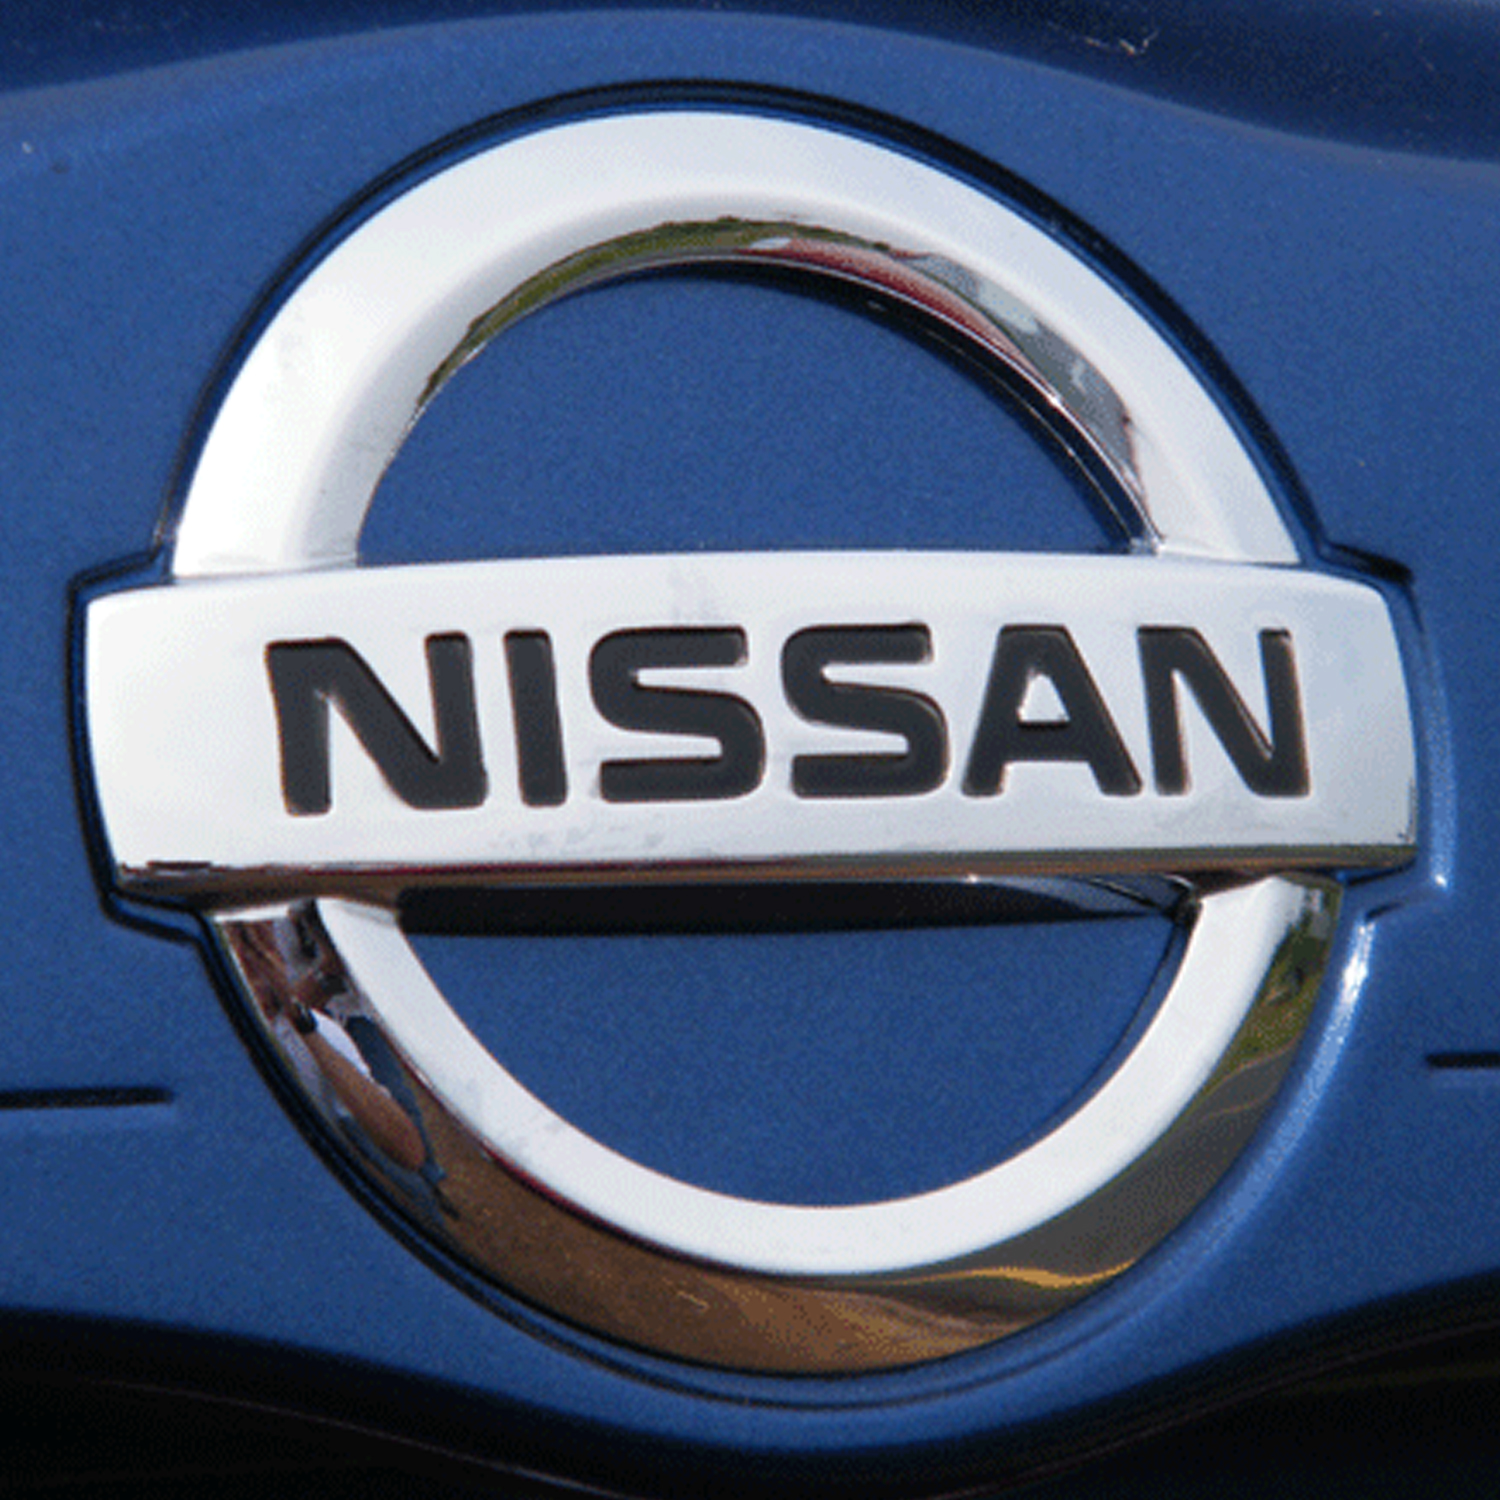 Nissan logo car emblem